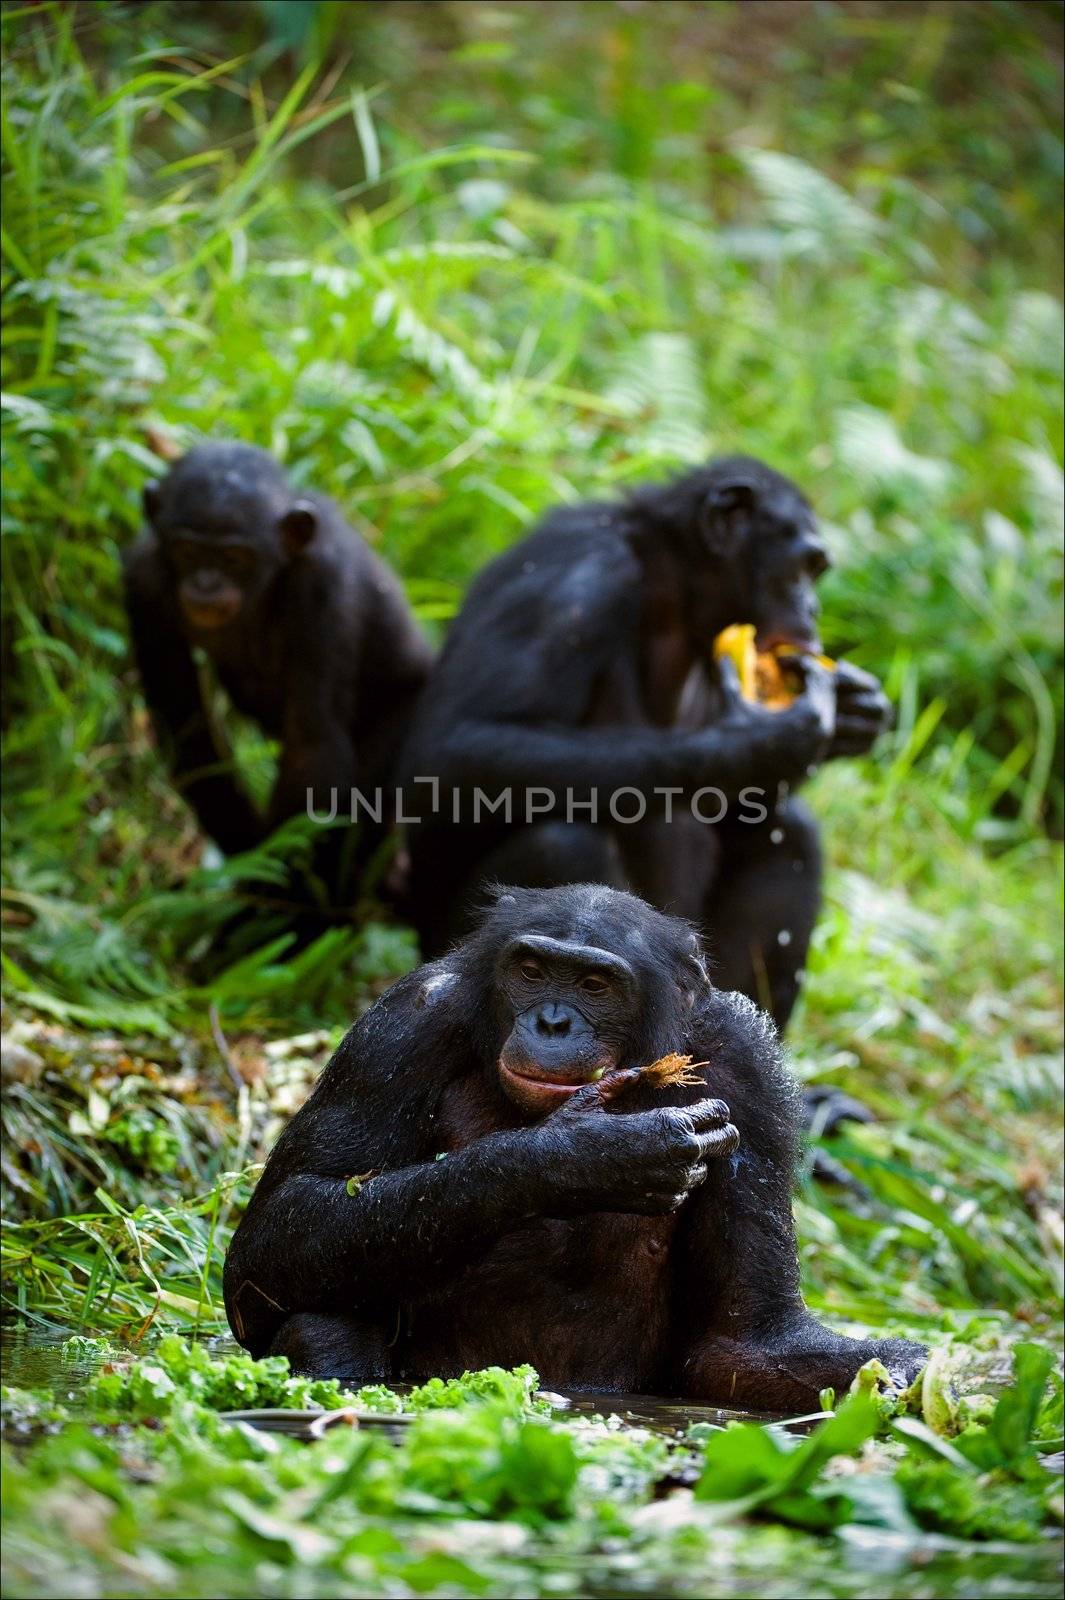 Chimpanzee Bonobo. Chimpanzees sit on a green lawn at a pond and eat.